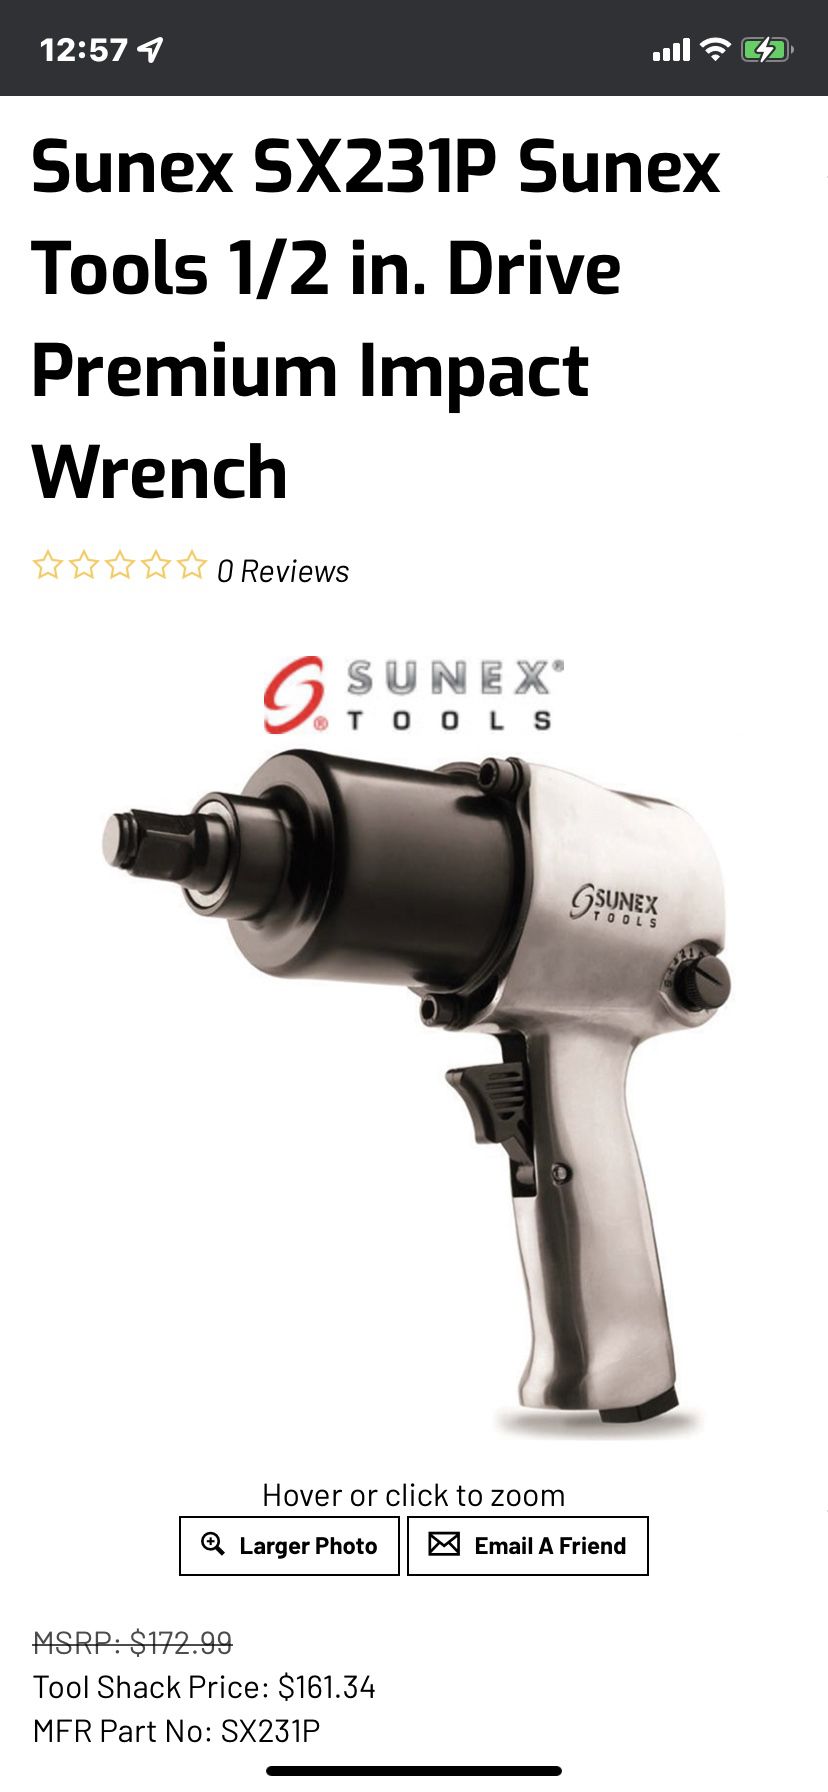 Sunex Heavy Duty Half-inch impact gun Brand new in the box with the factory warranty